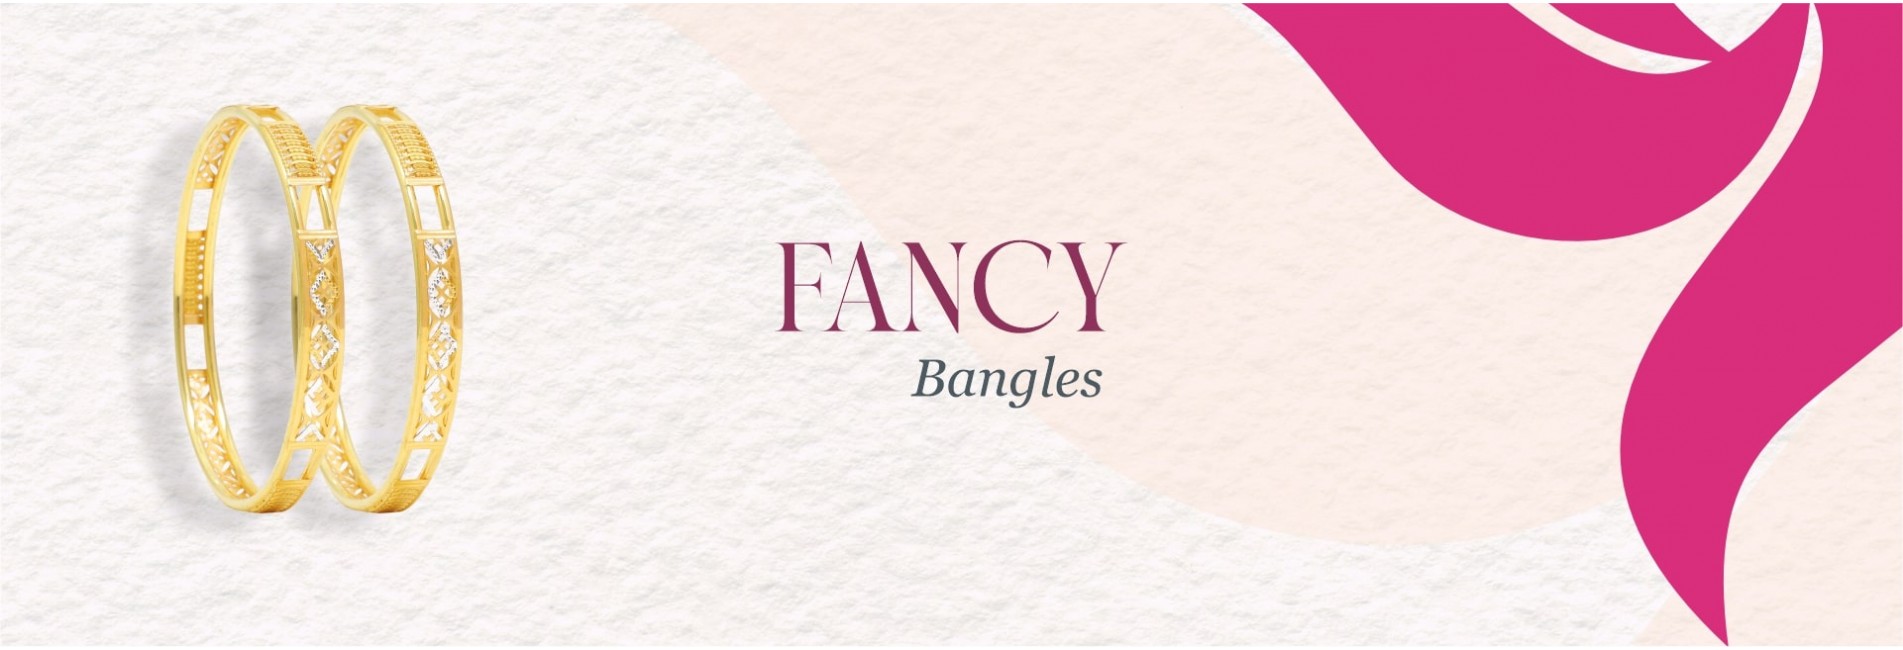 Fancy Bangles